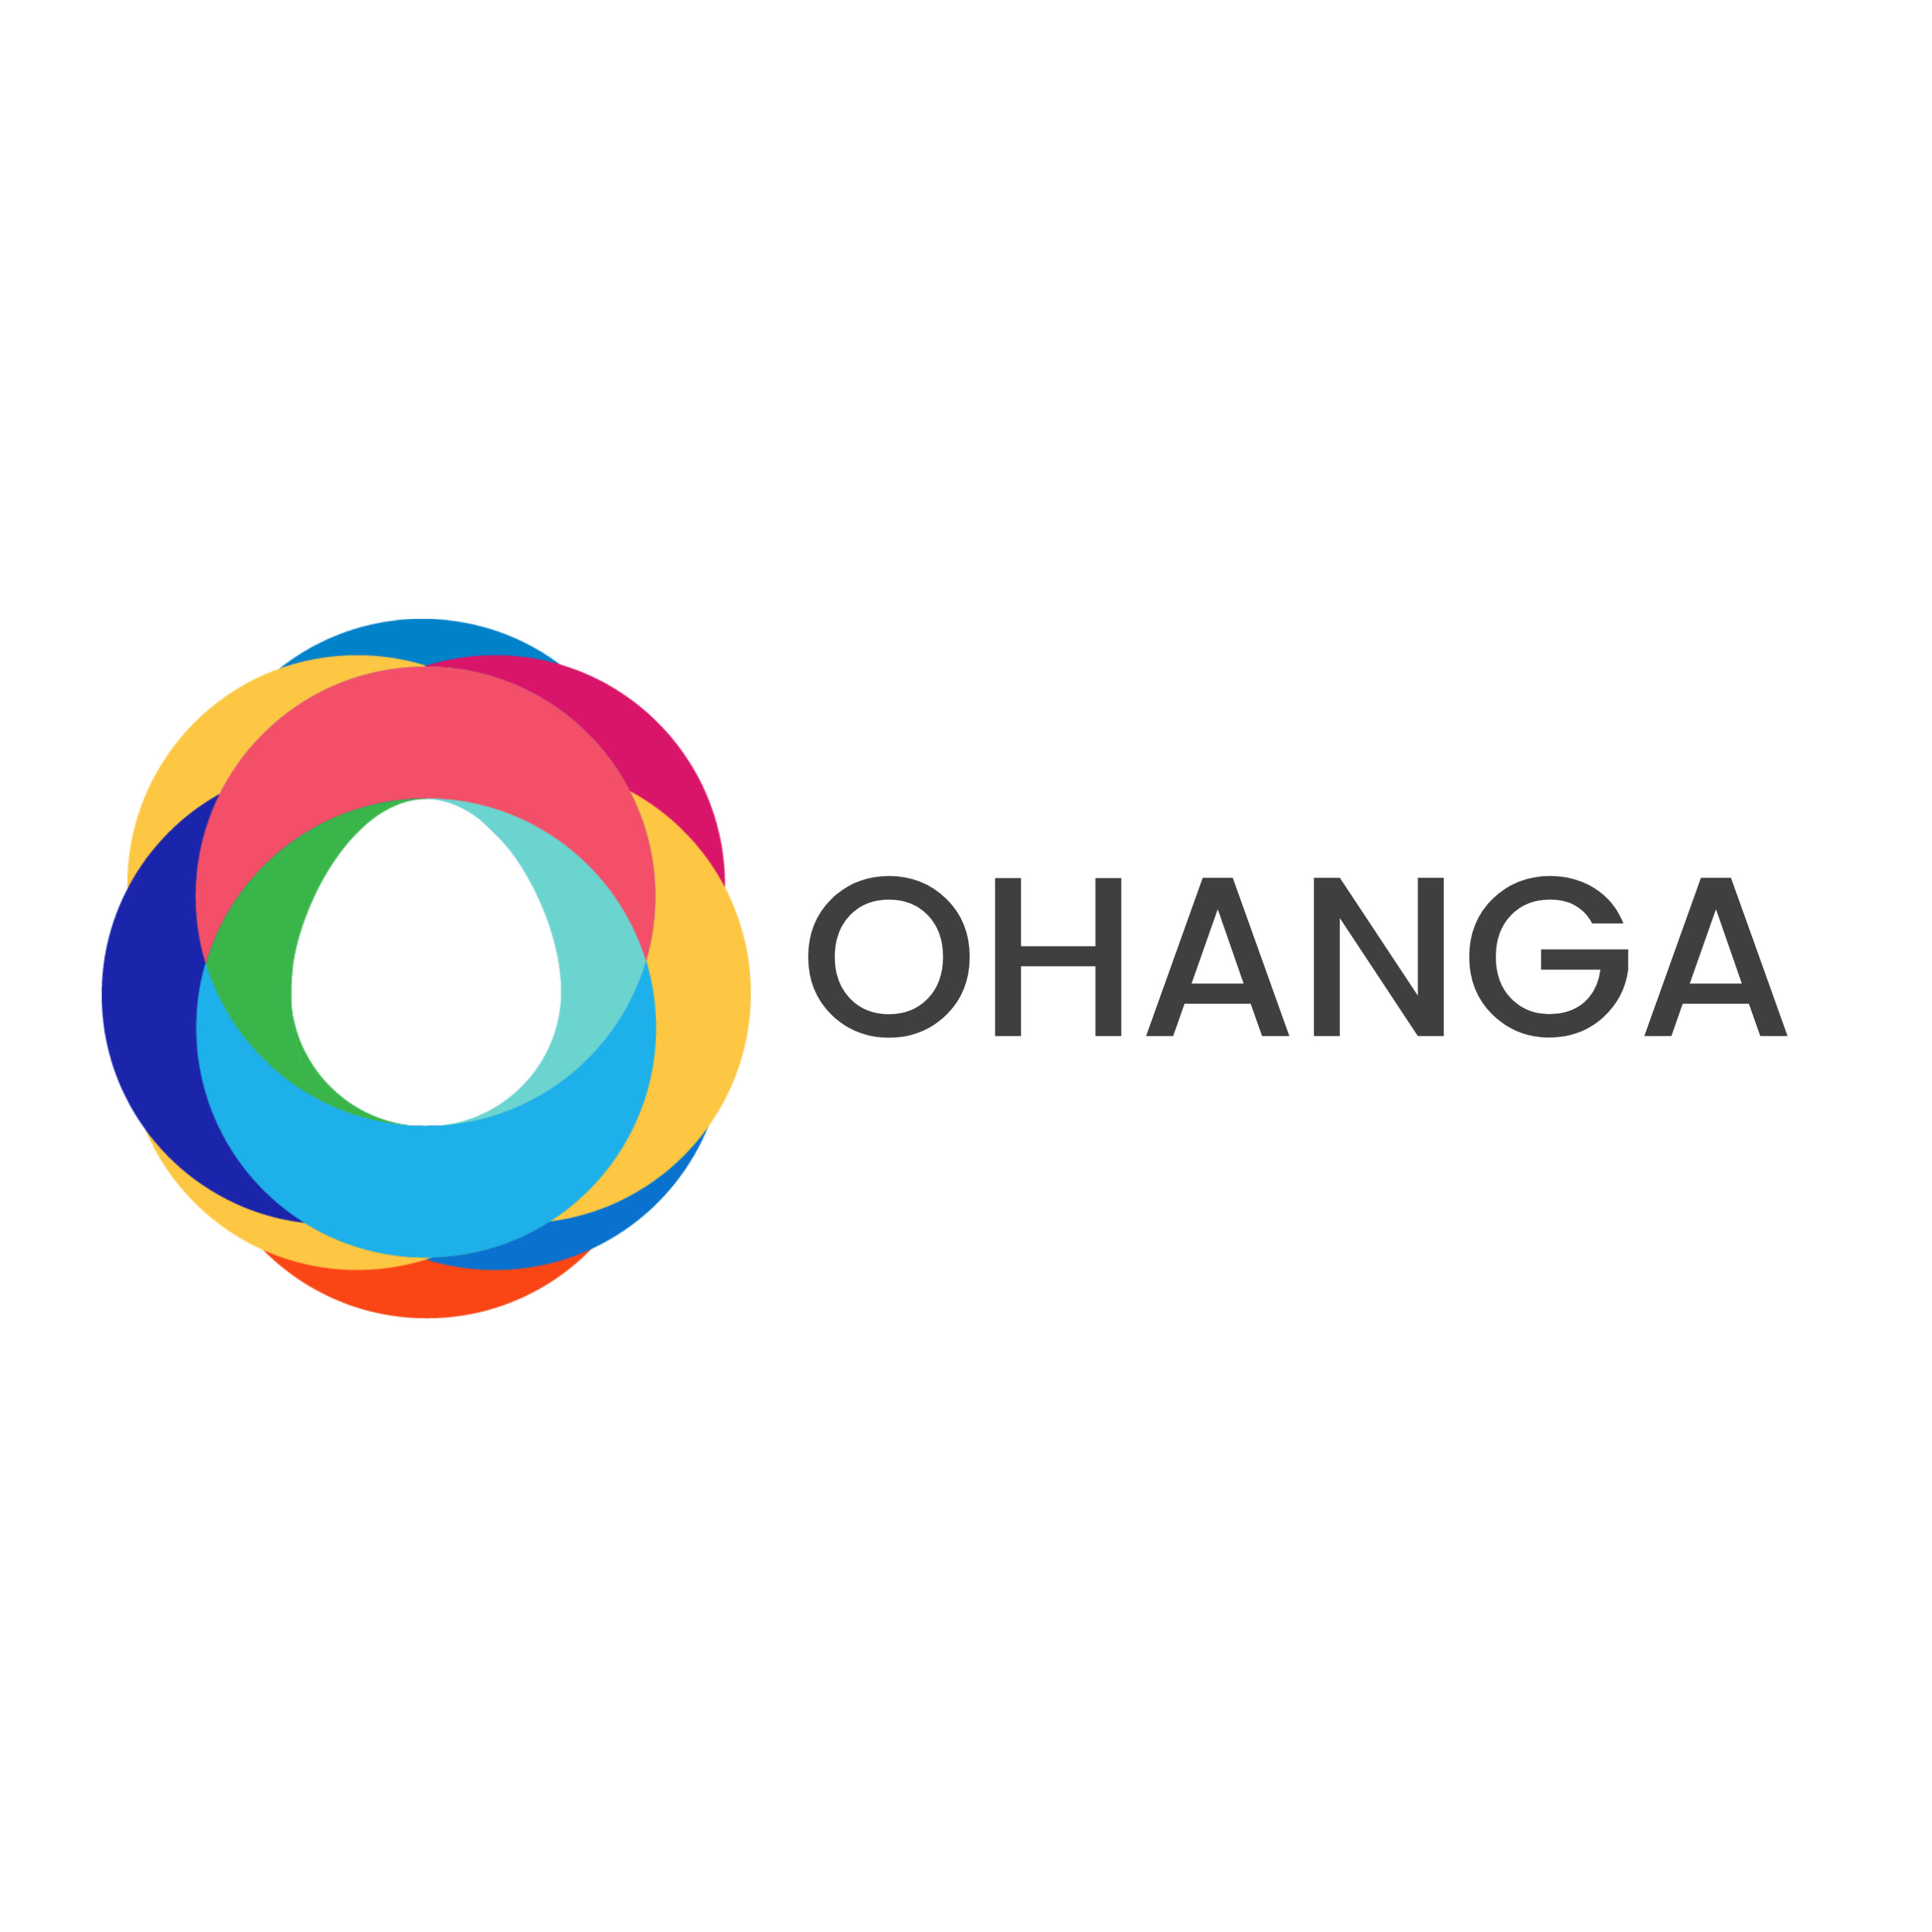 Ohanga logo